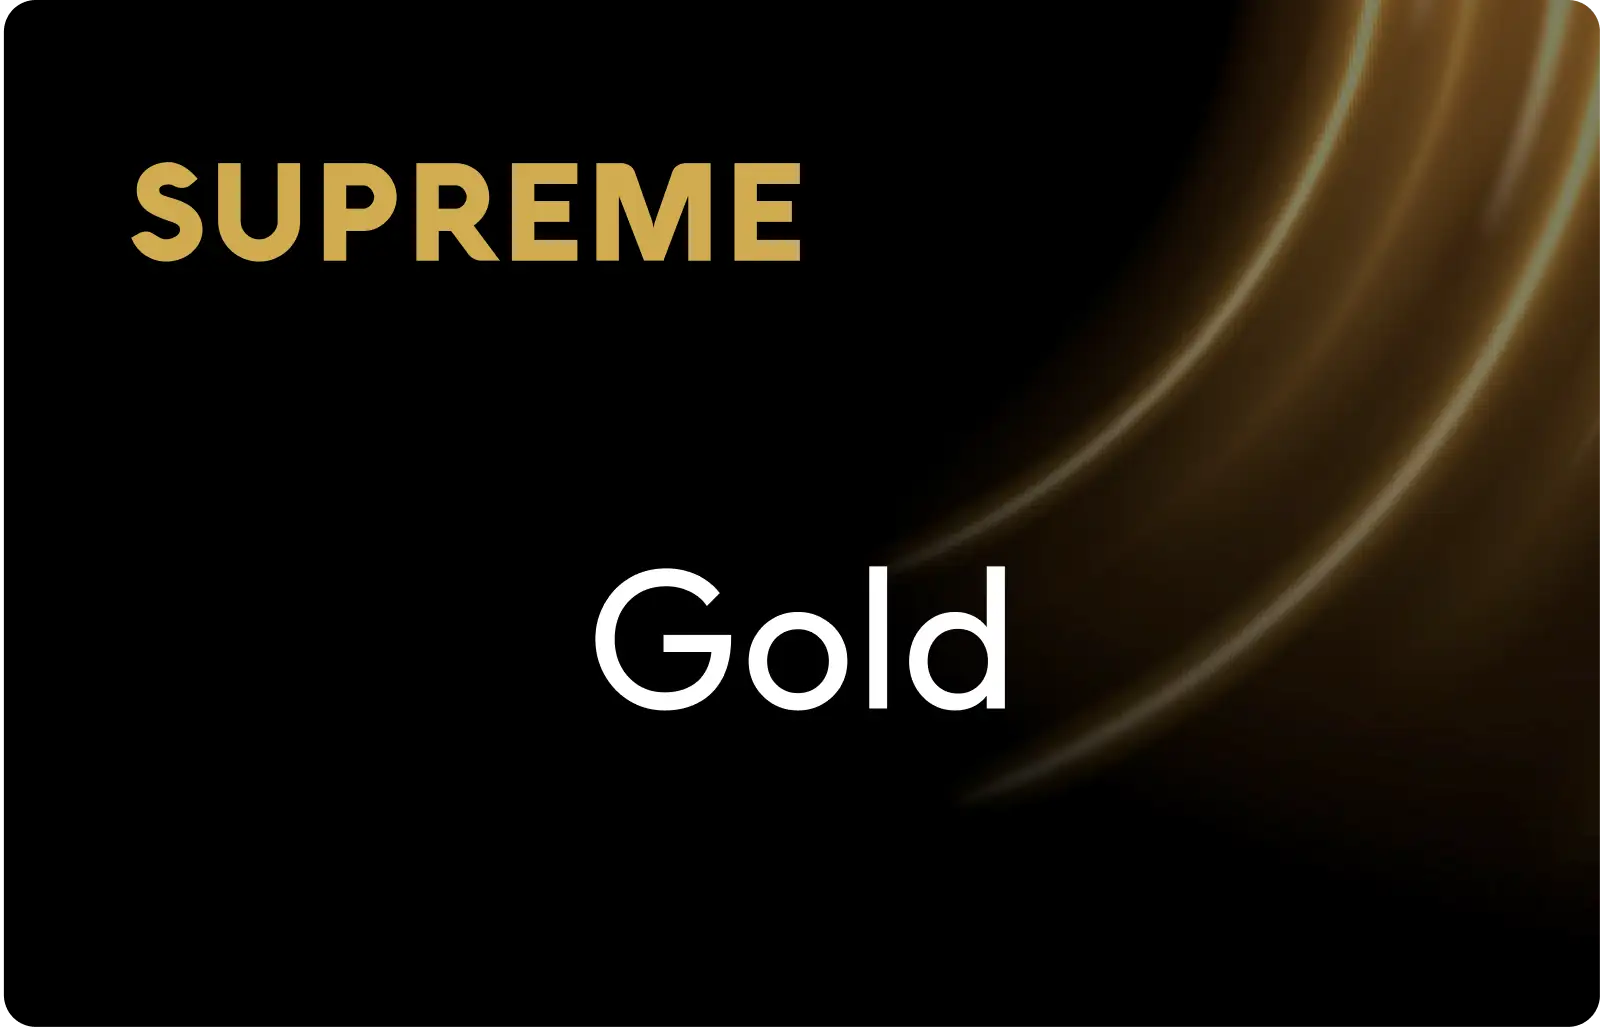 SUPREME Gold Customer